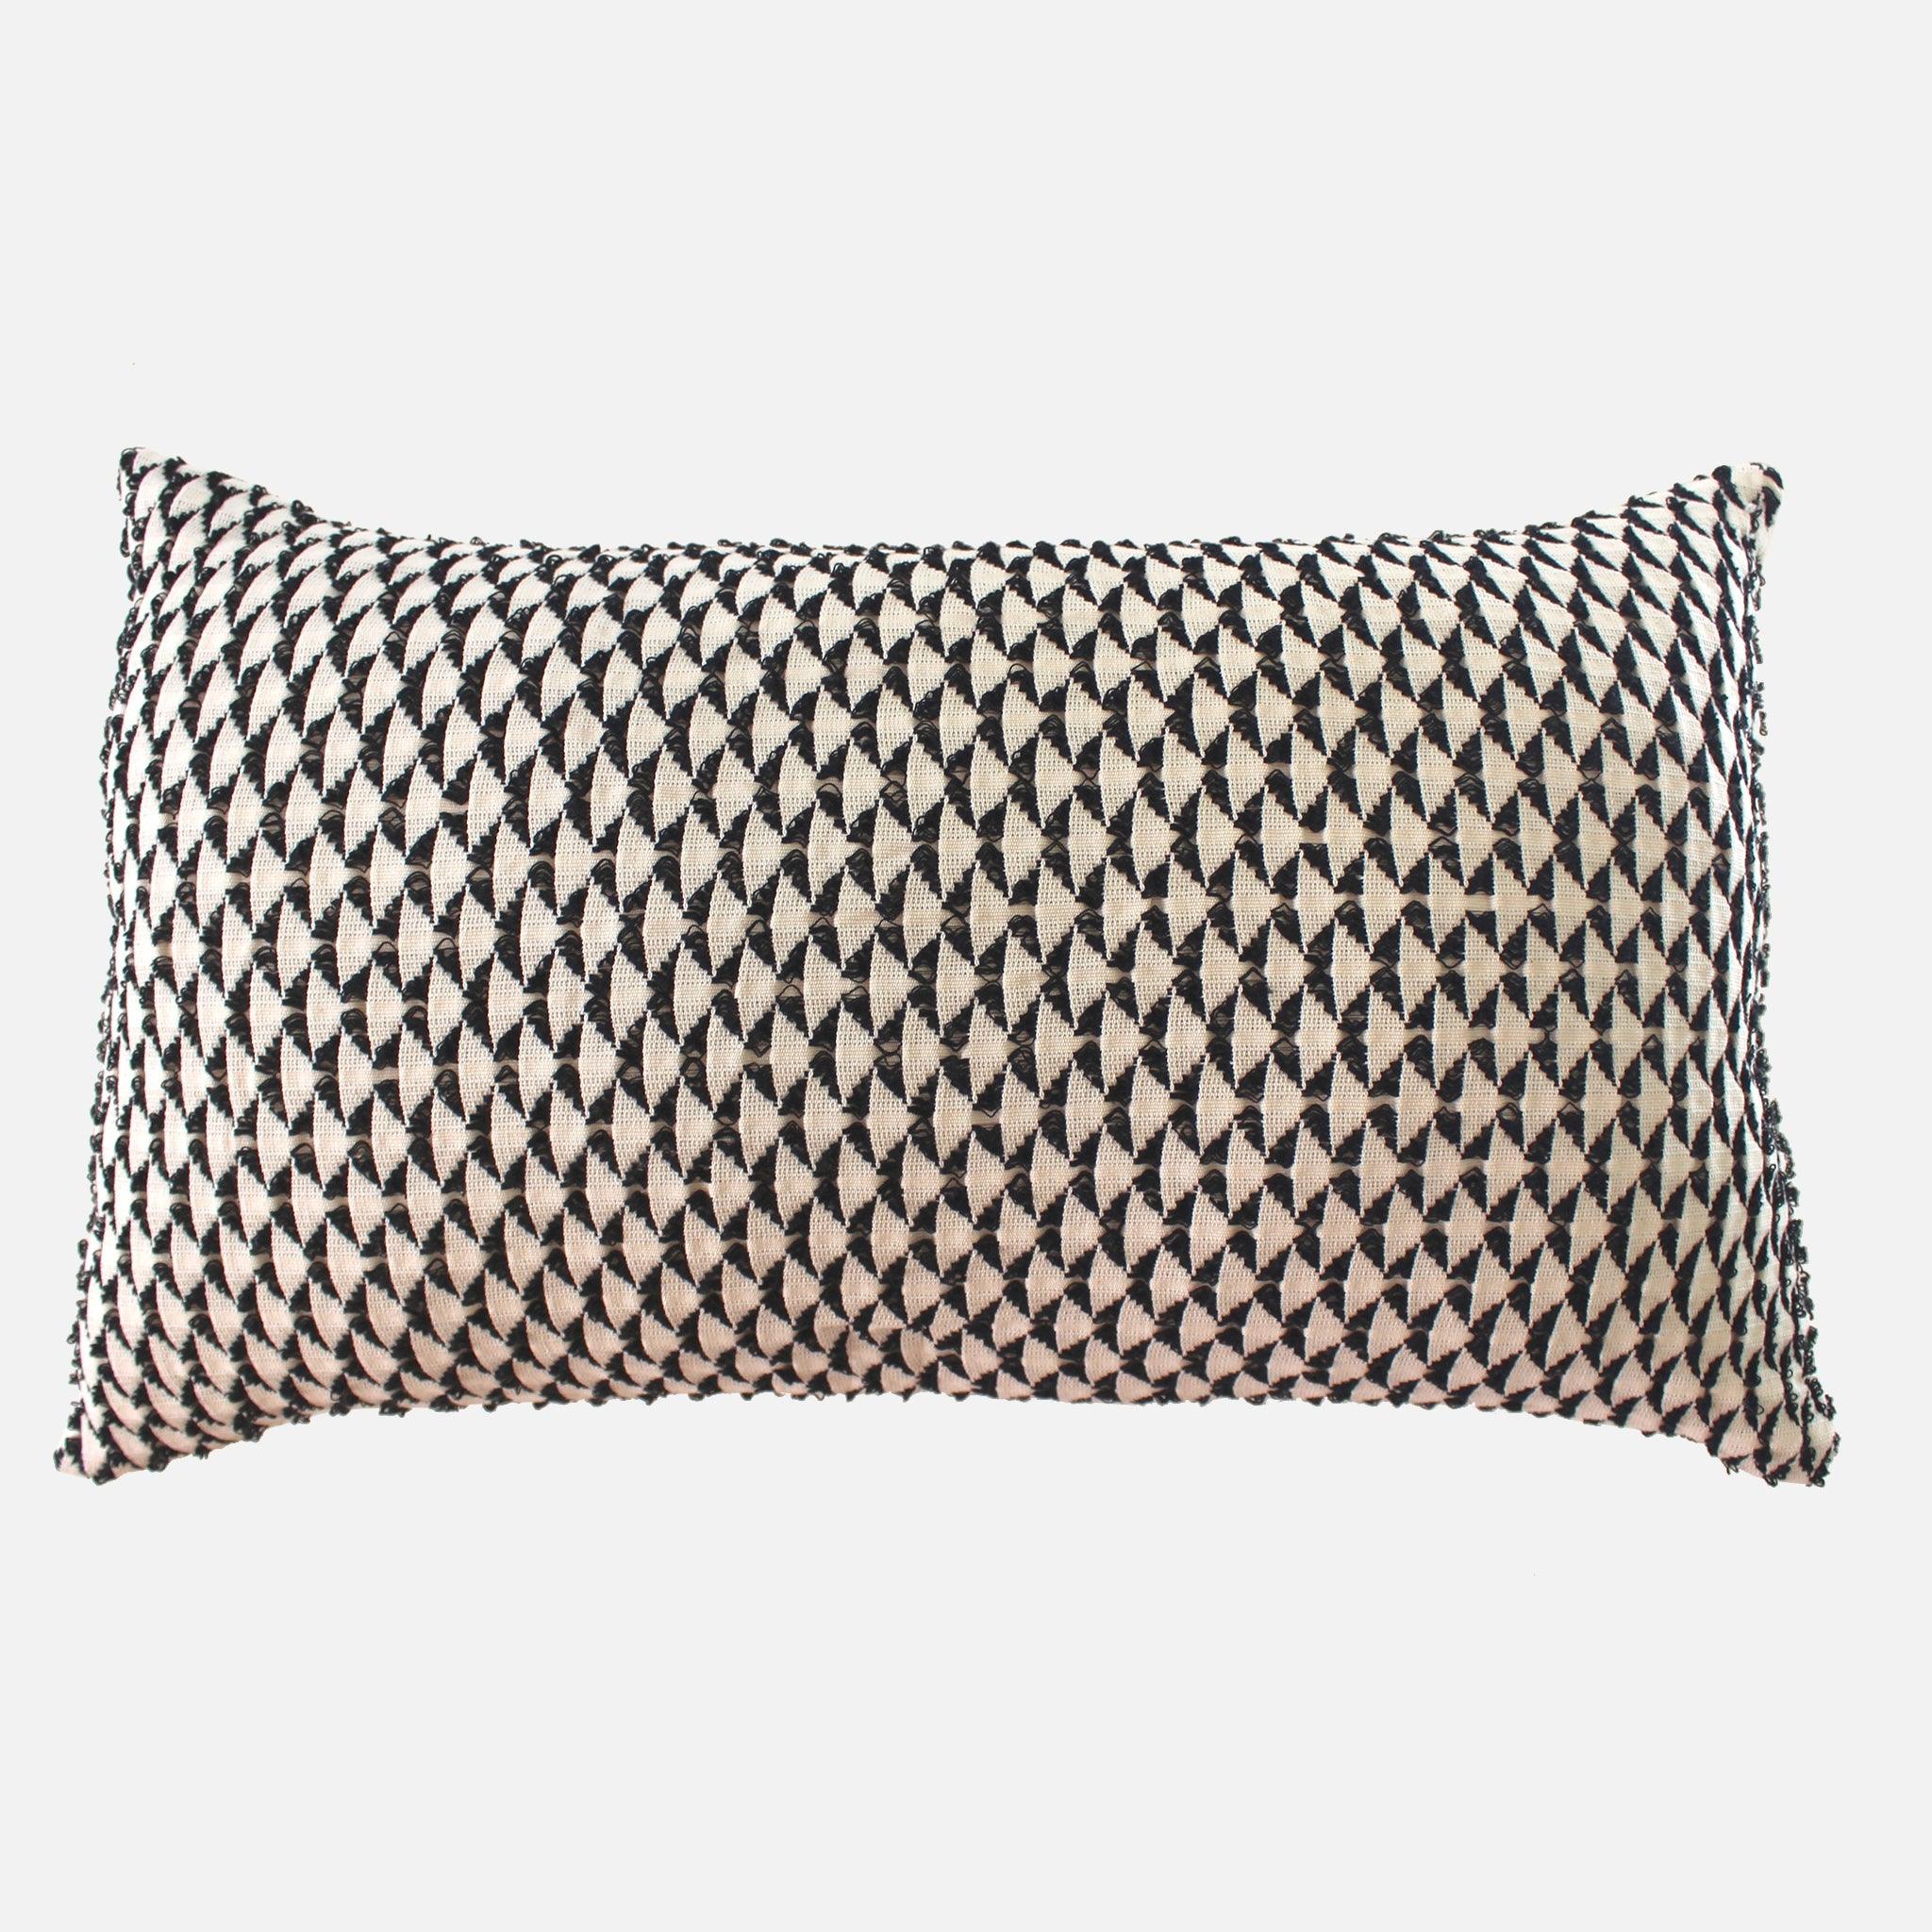 54kibo - African Lumbar Throw Pillow - Black and White Decor Pillows - Farmhouse Boho Throw Pillows - Sofa Pillow - Accent Pillows for Couch